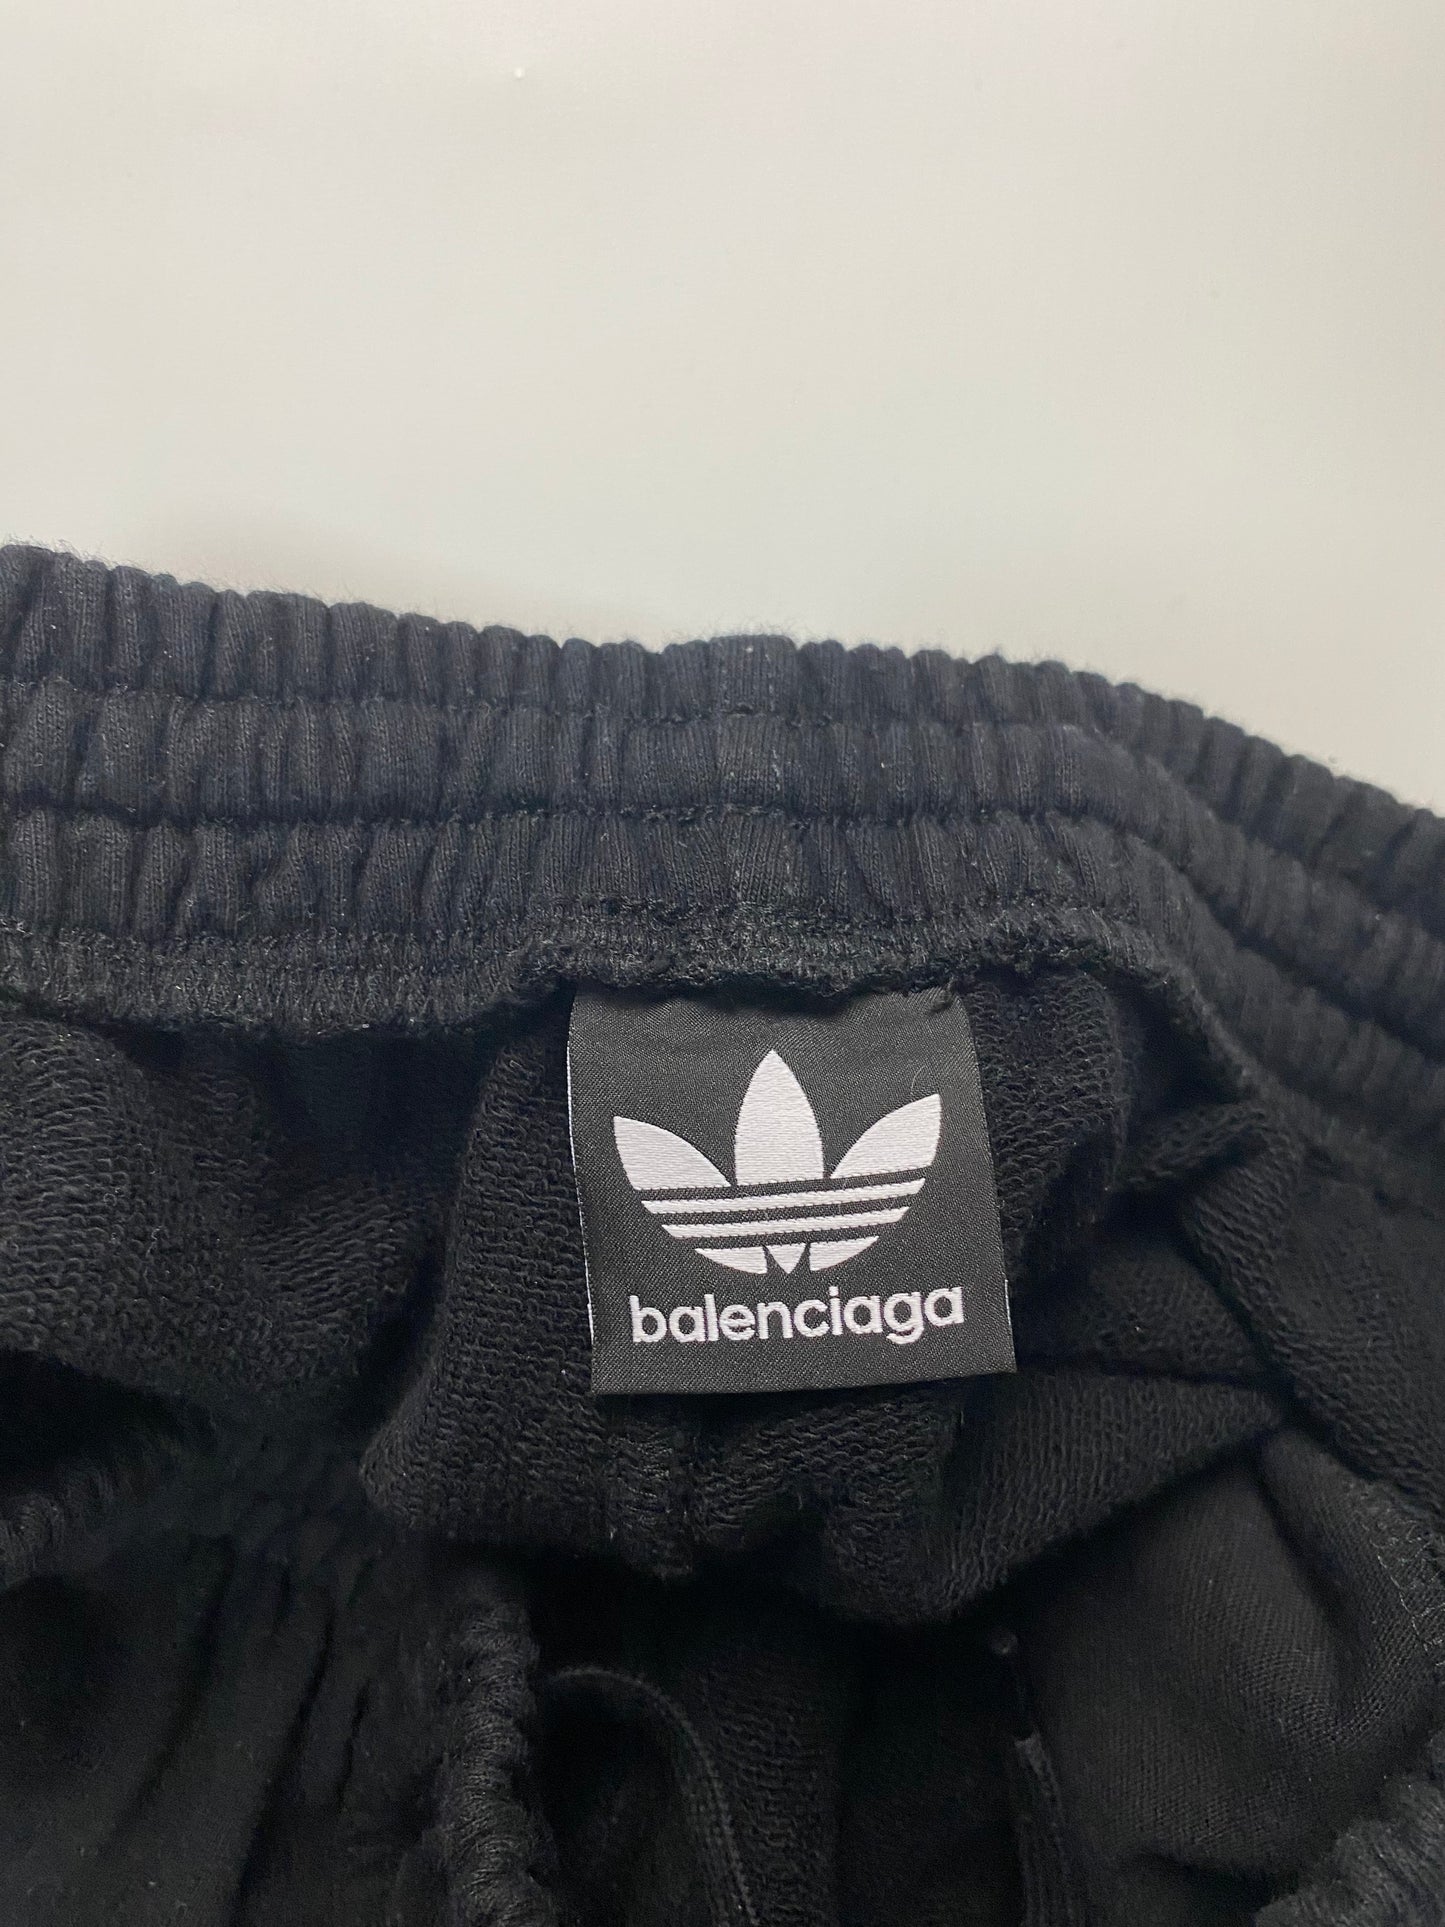 Balenciaga x Adidas Spring23 NYC Show long baggy sweatpants in black SZ:S